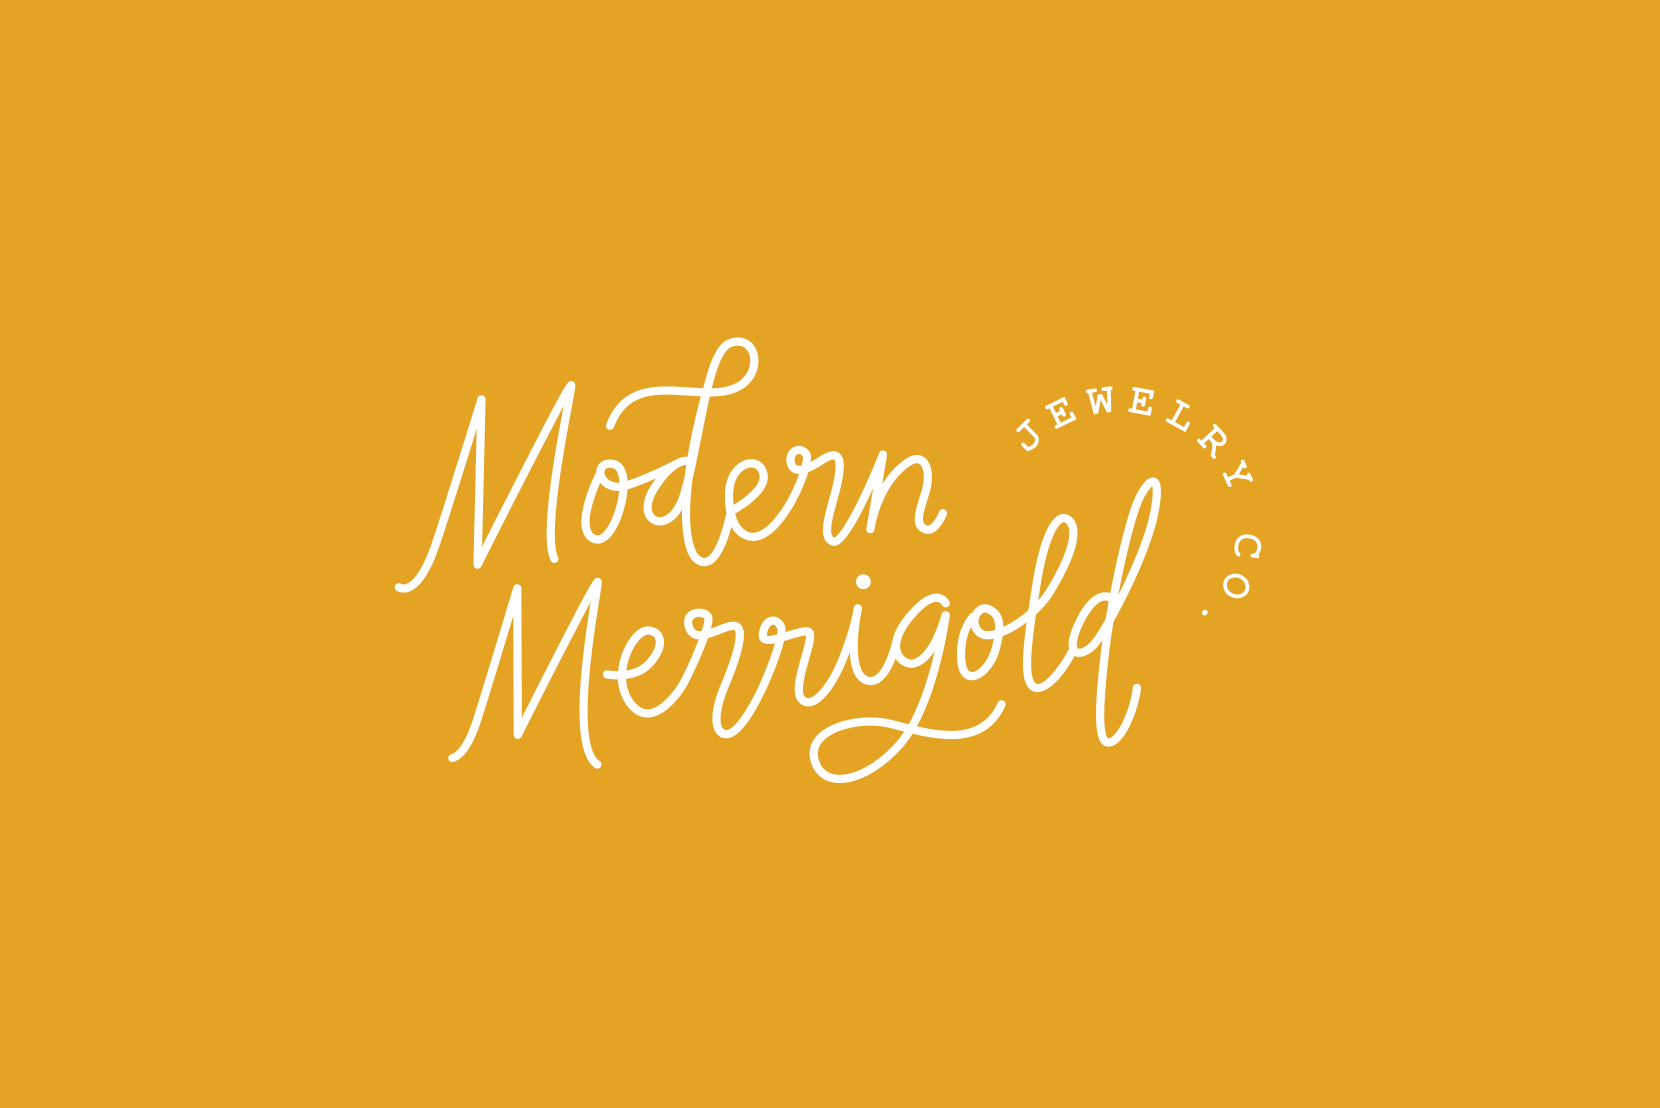 We offer branding services including business naming. Business naming for a jewelry brand, Modern Merrigold